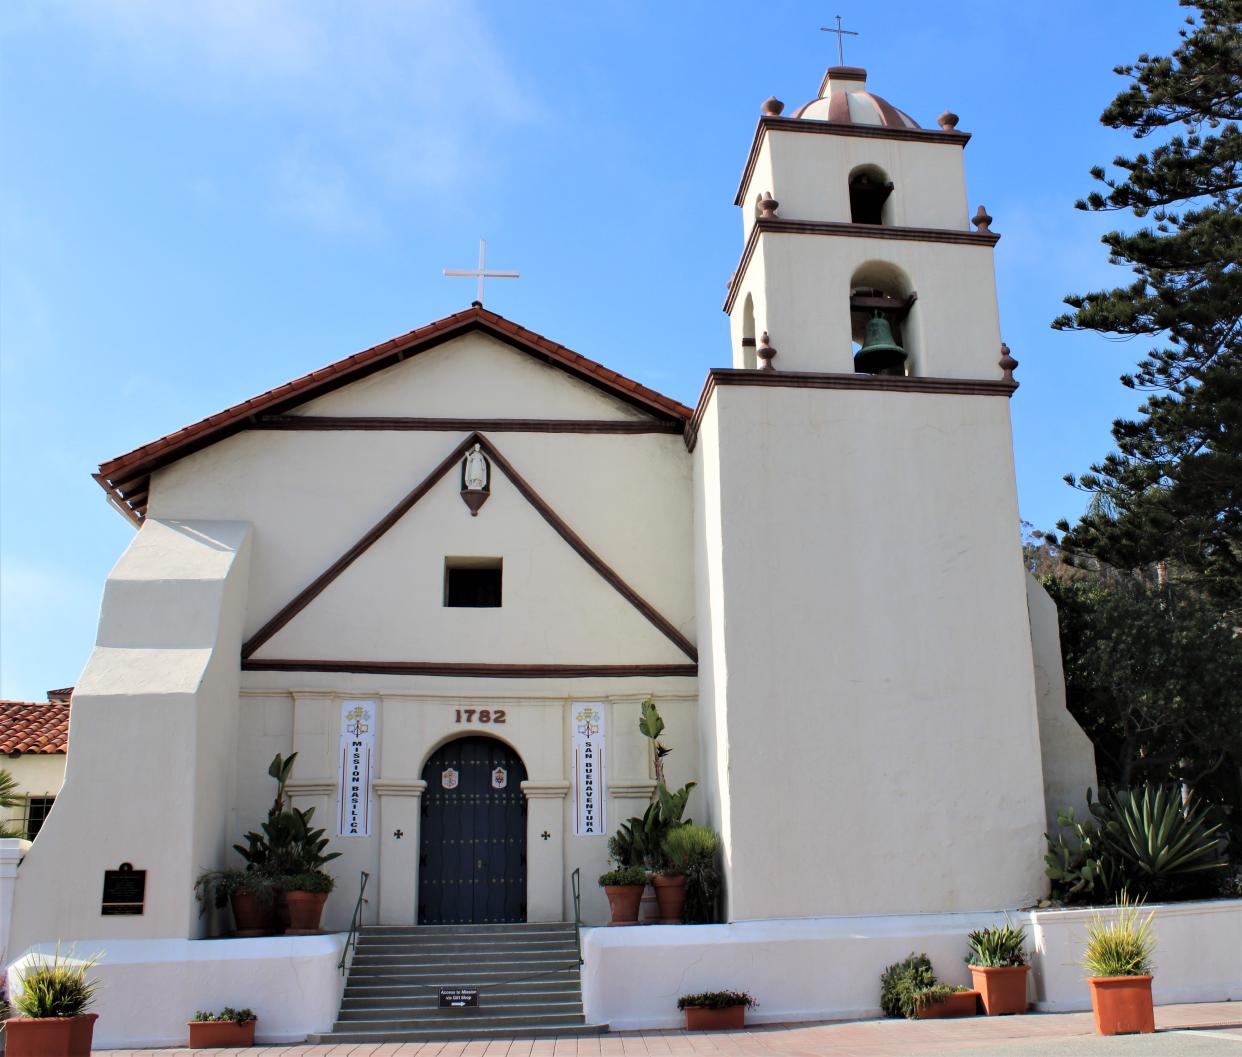 San Buenaventura Mission in Ventura, Calif.